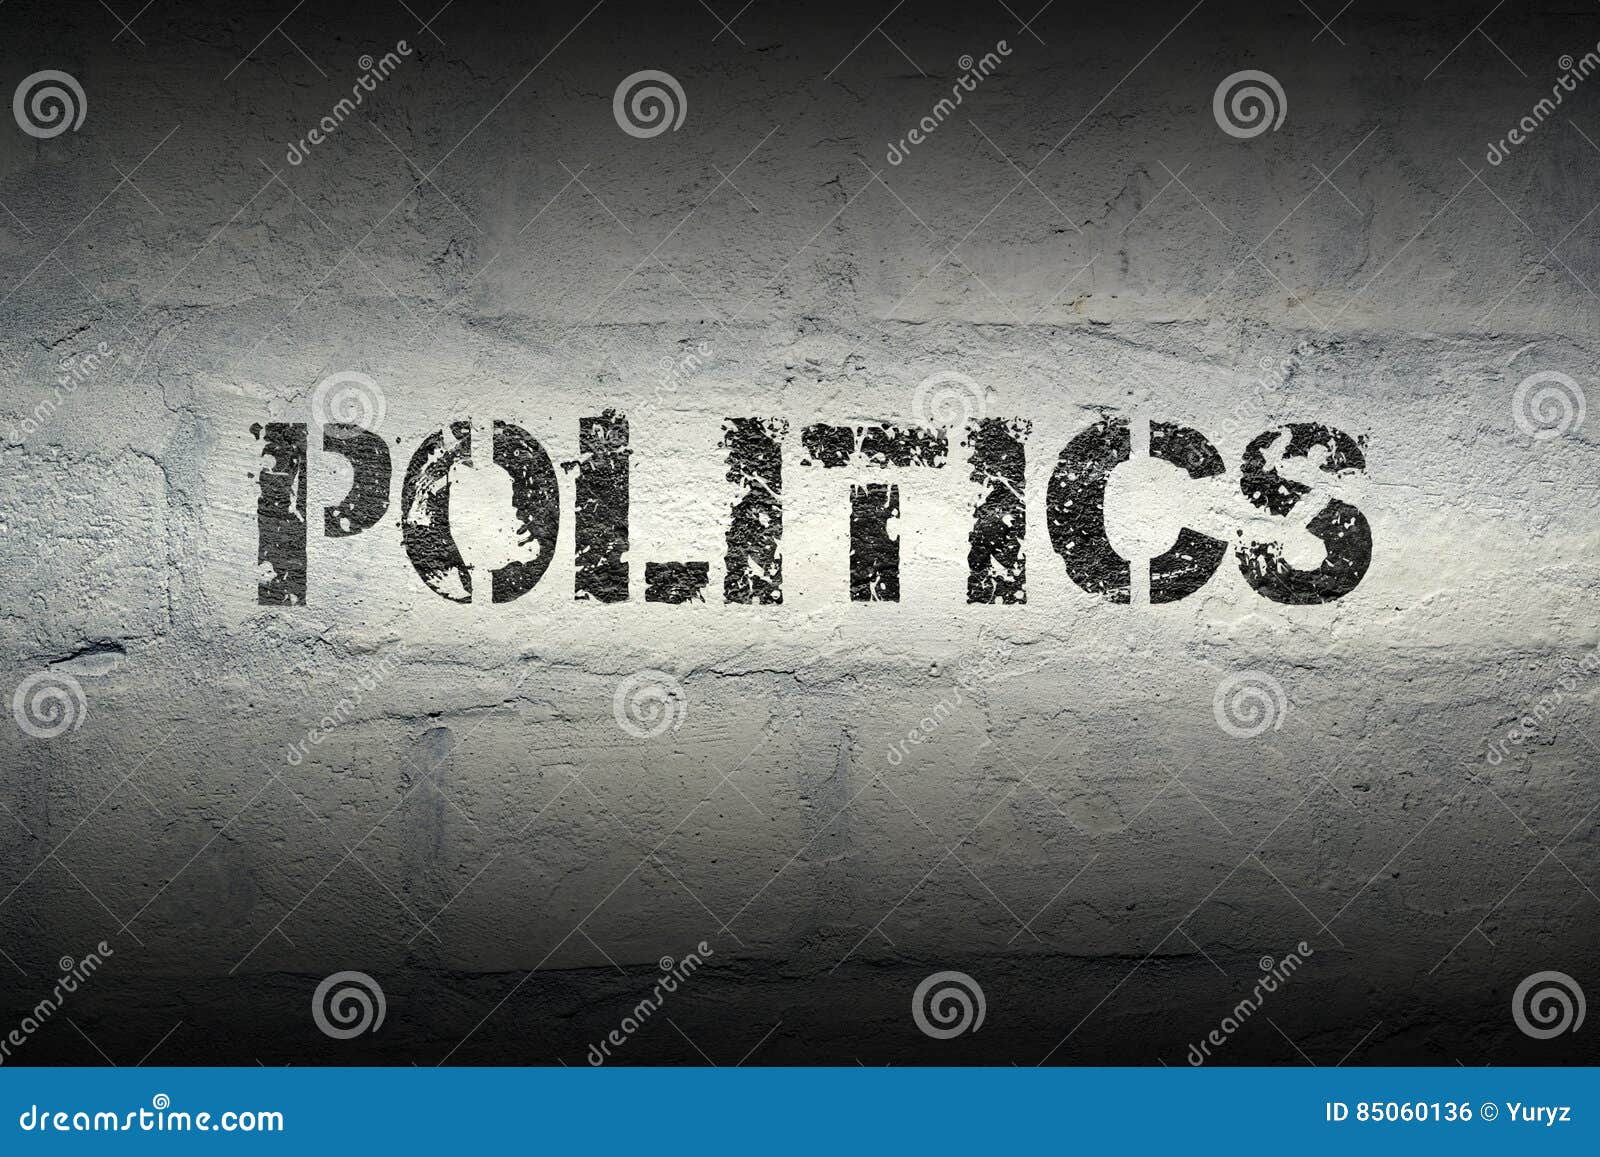 politics word gr